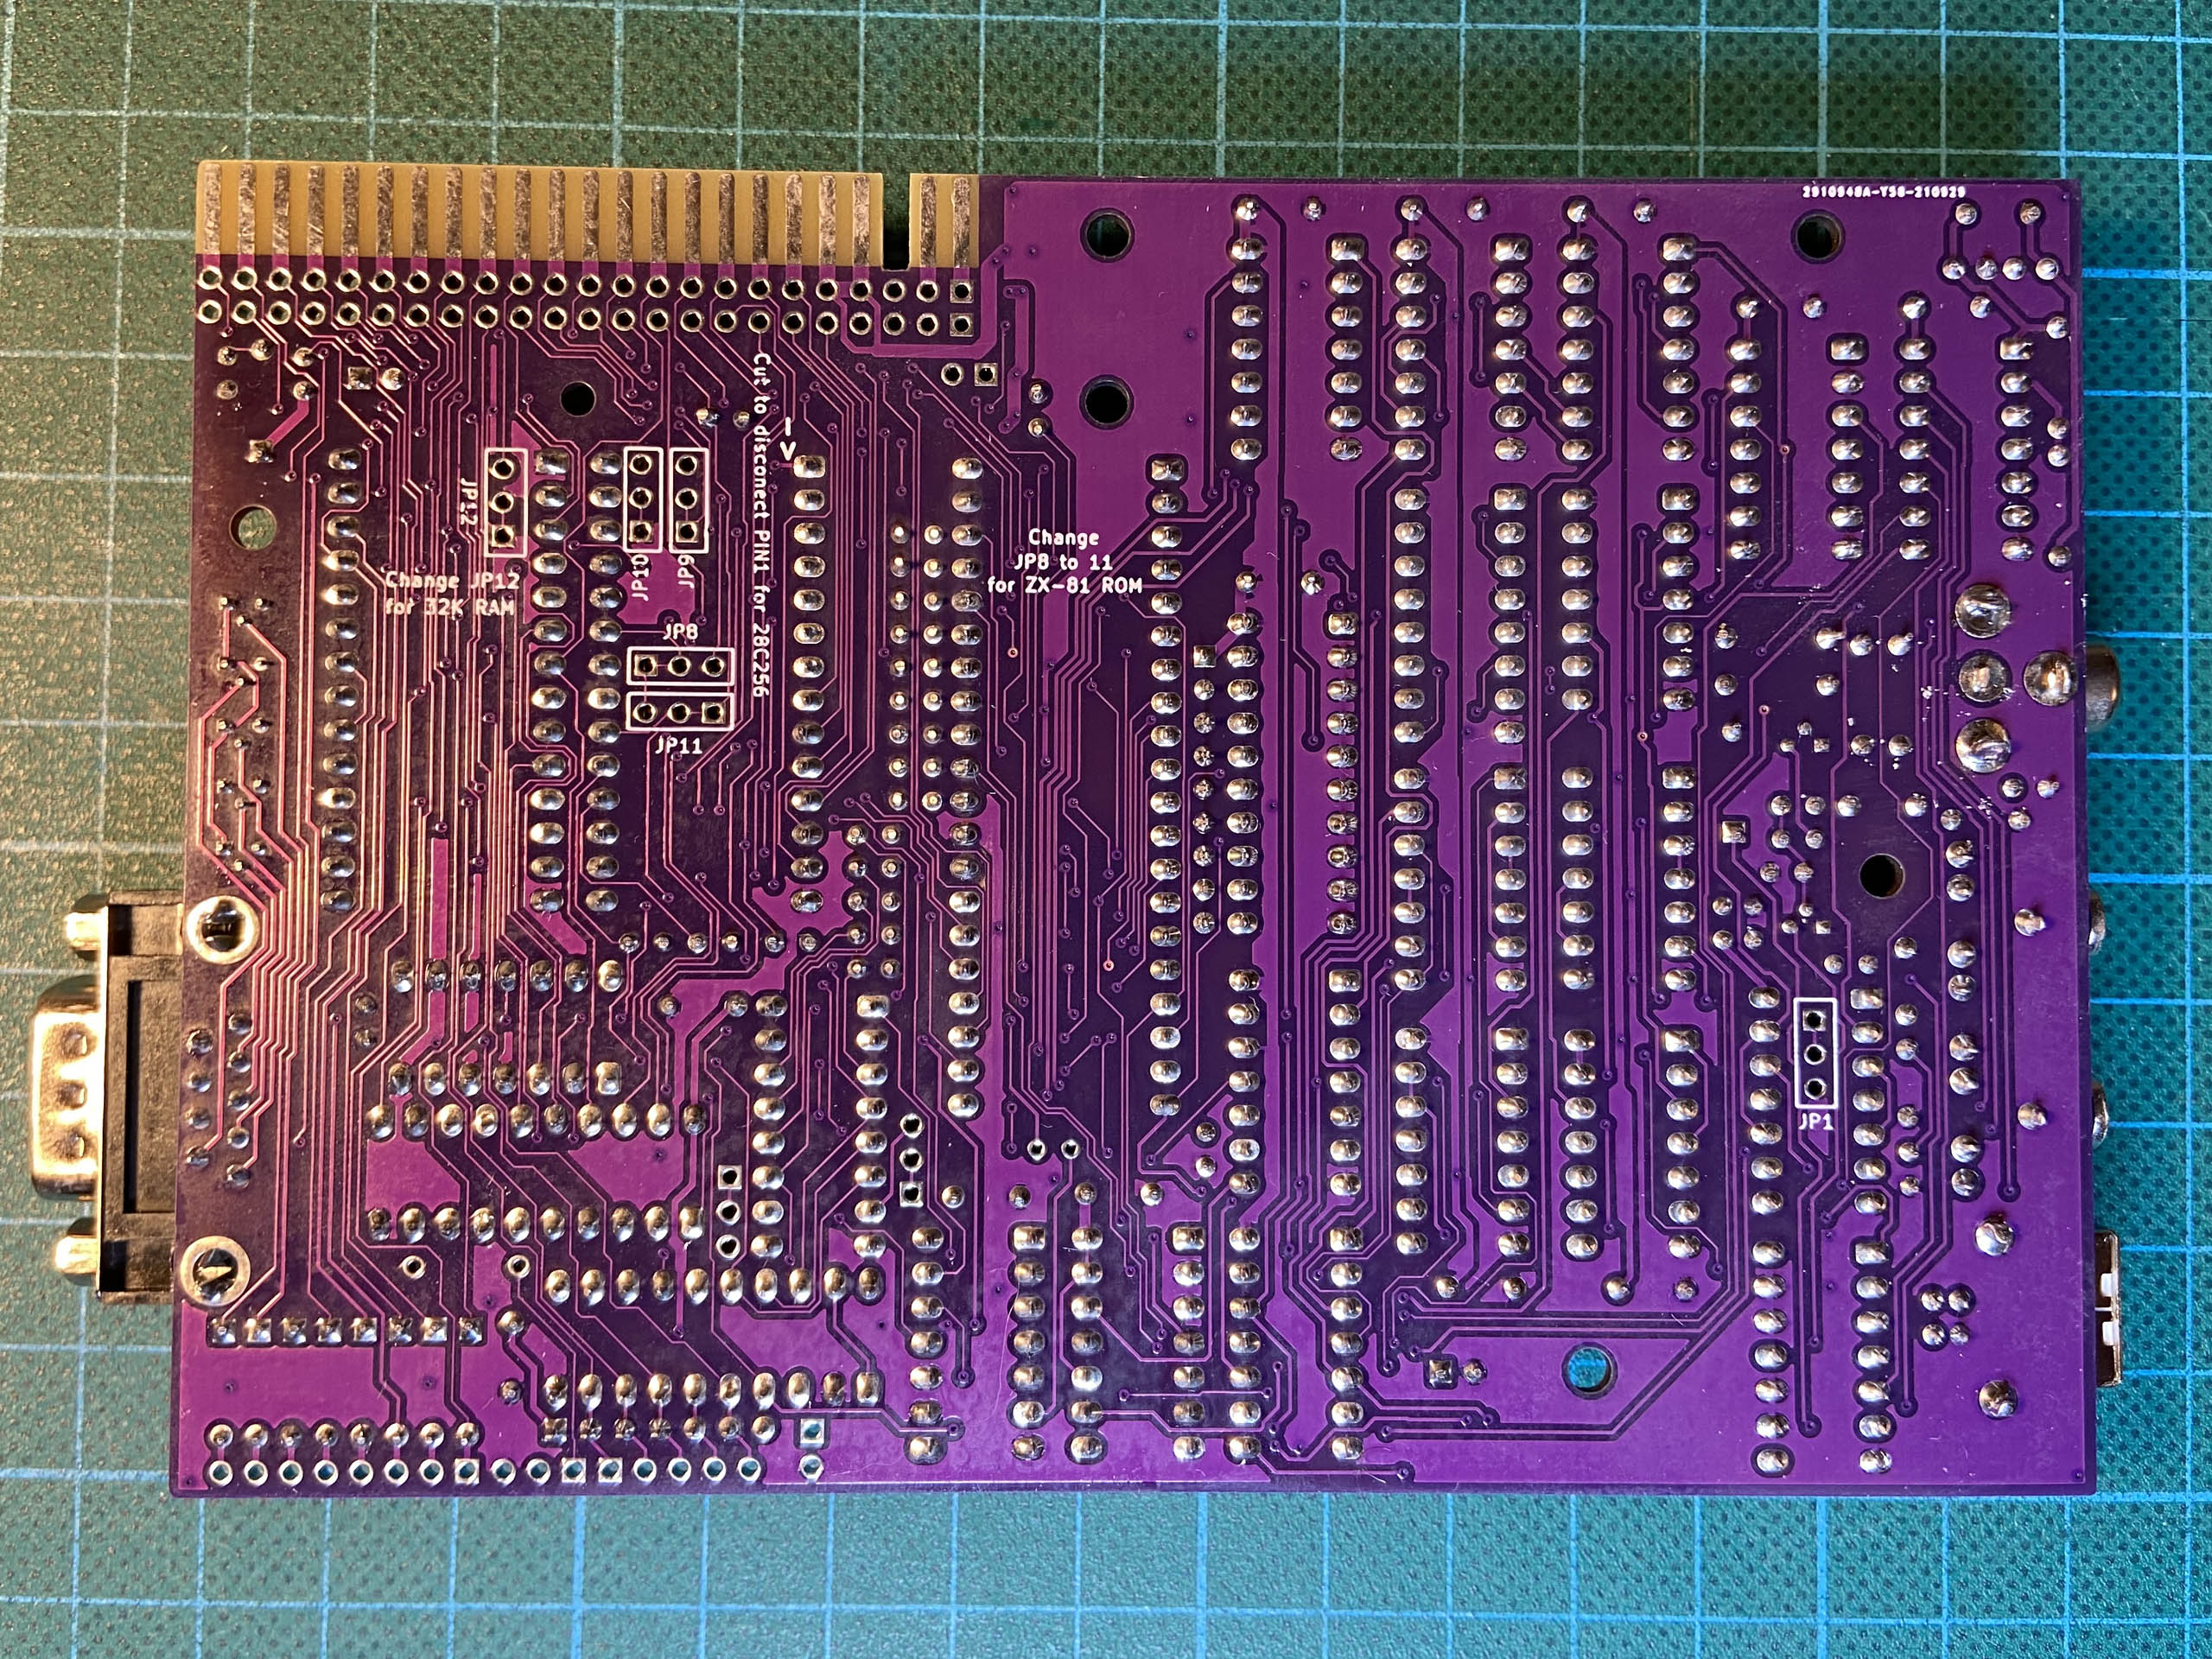 Building a new ZX81 Computer | hackup.net